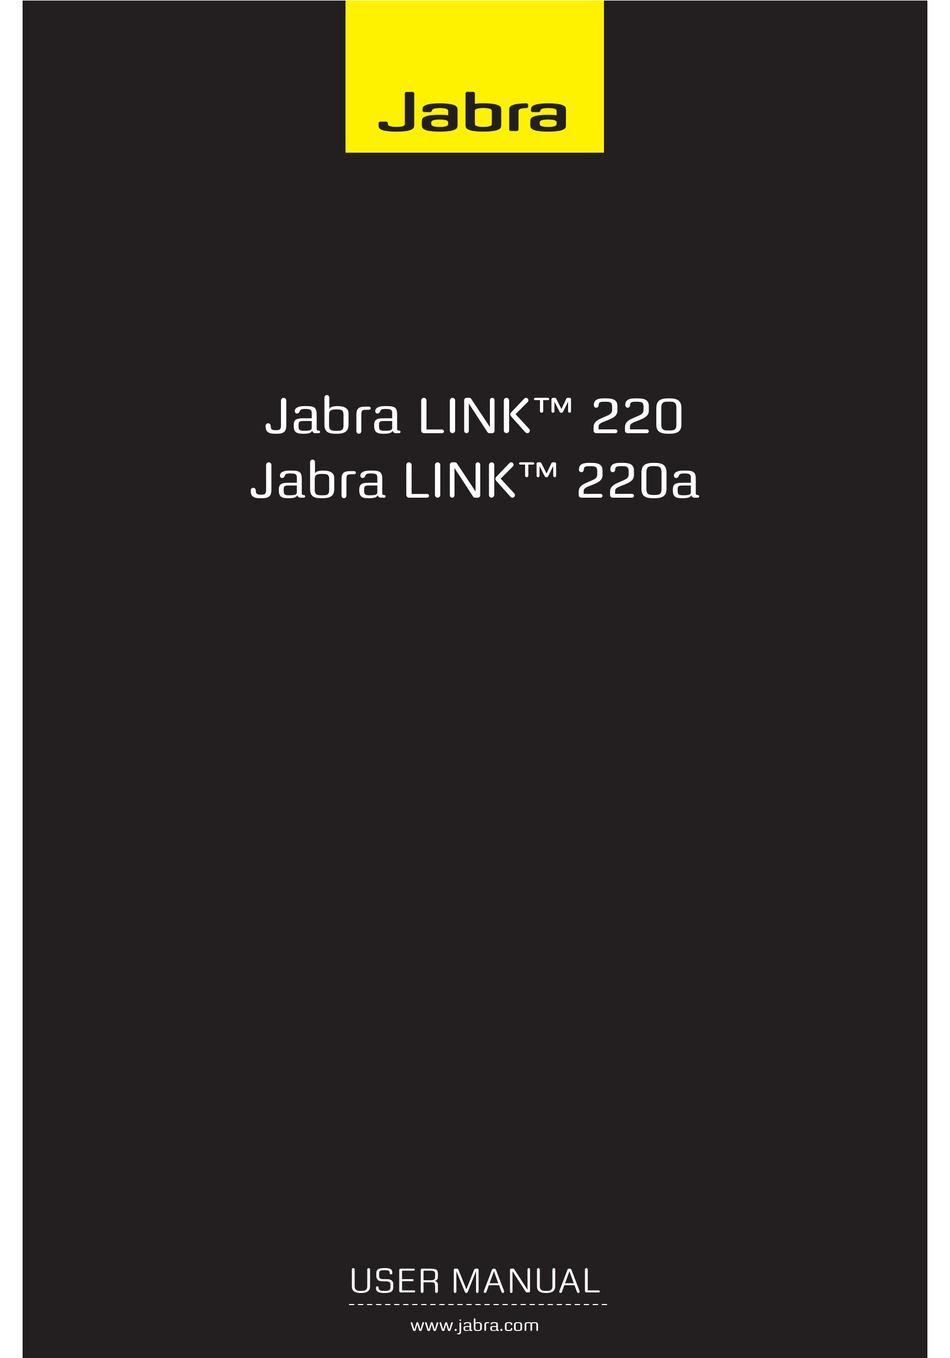 JABRA LINK 220 USER MANUAL Pdf Download | ManualsLib